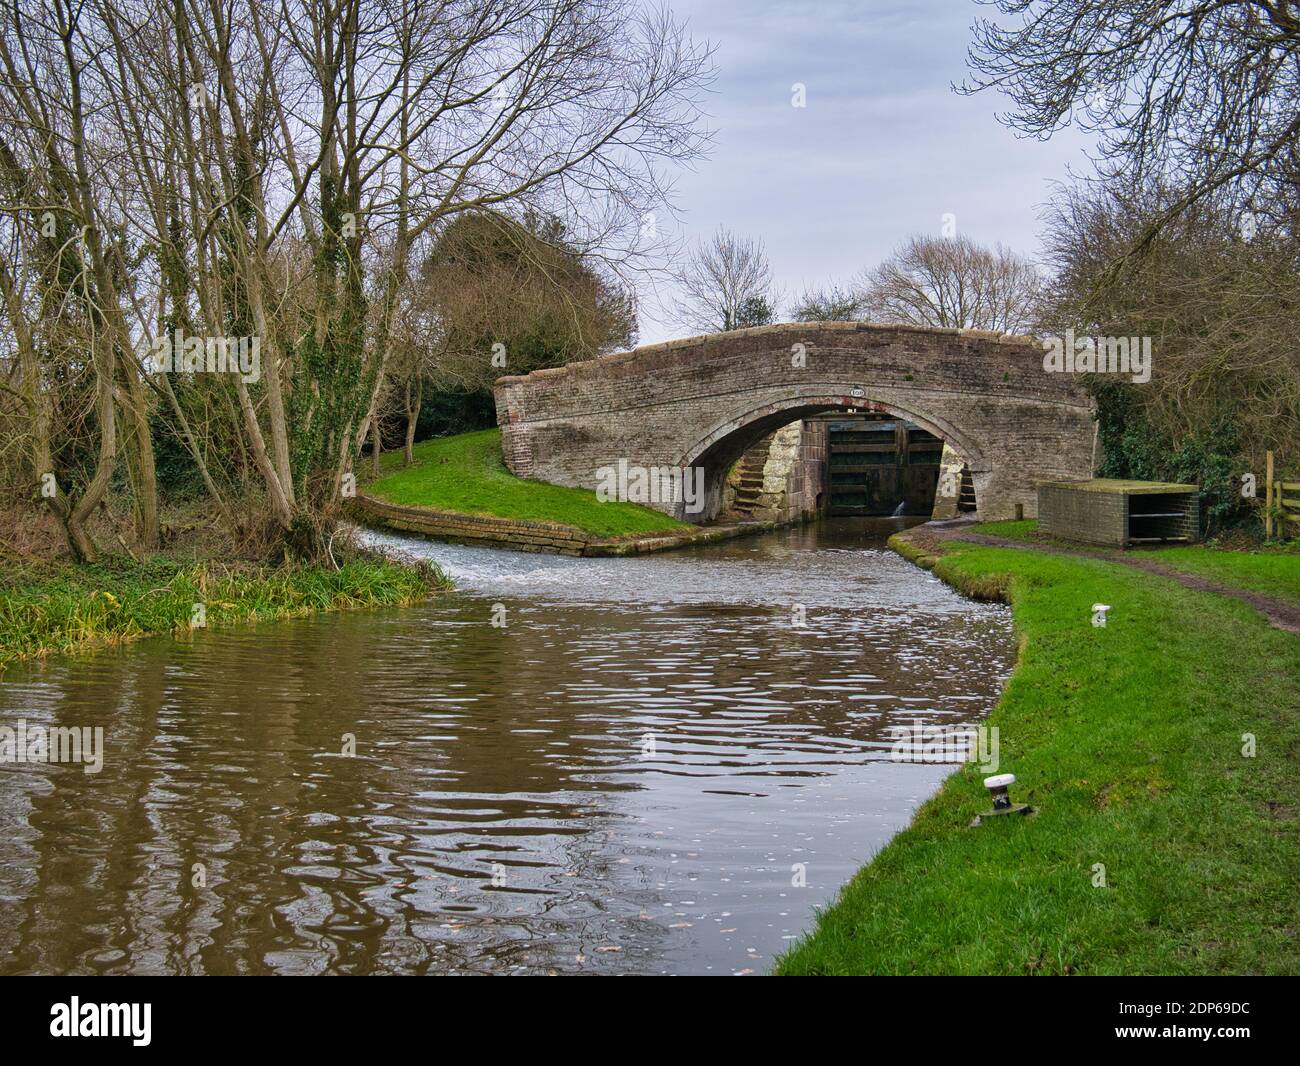 Bridge 108 and the lower gates of Wharton's Lock on the Shropshire Union Canal near Beeston in Cheshire, England, UK. Stock Photo